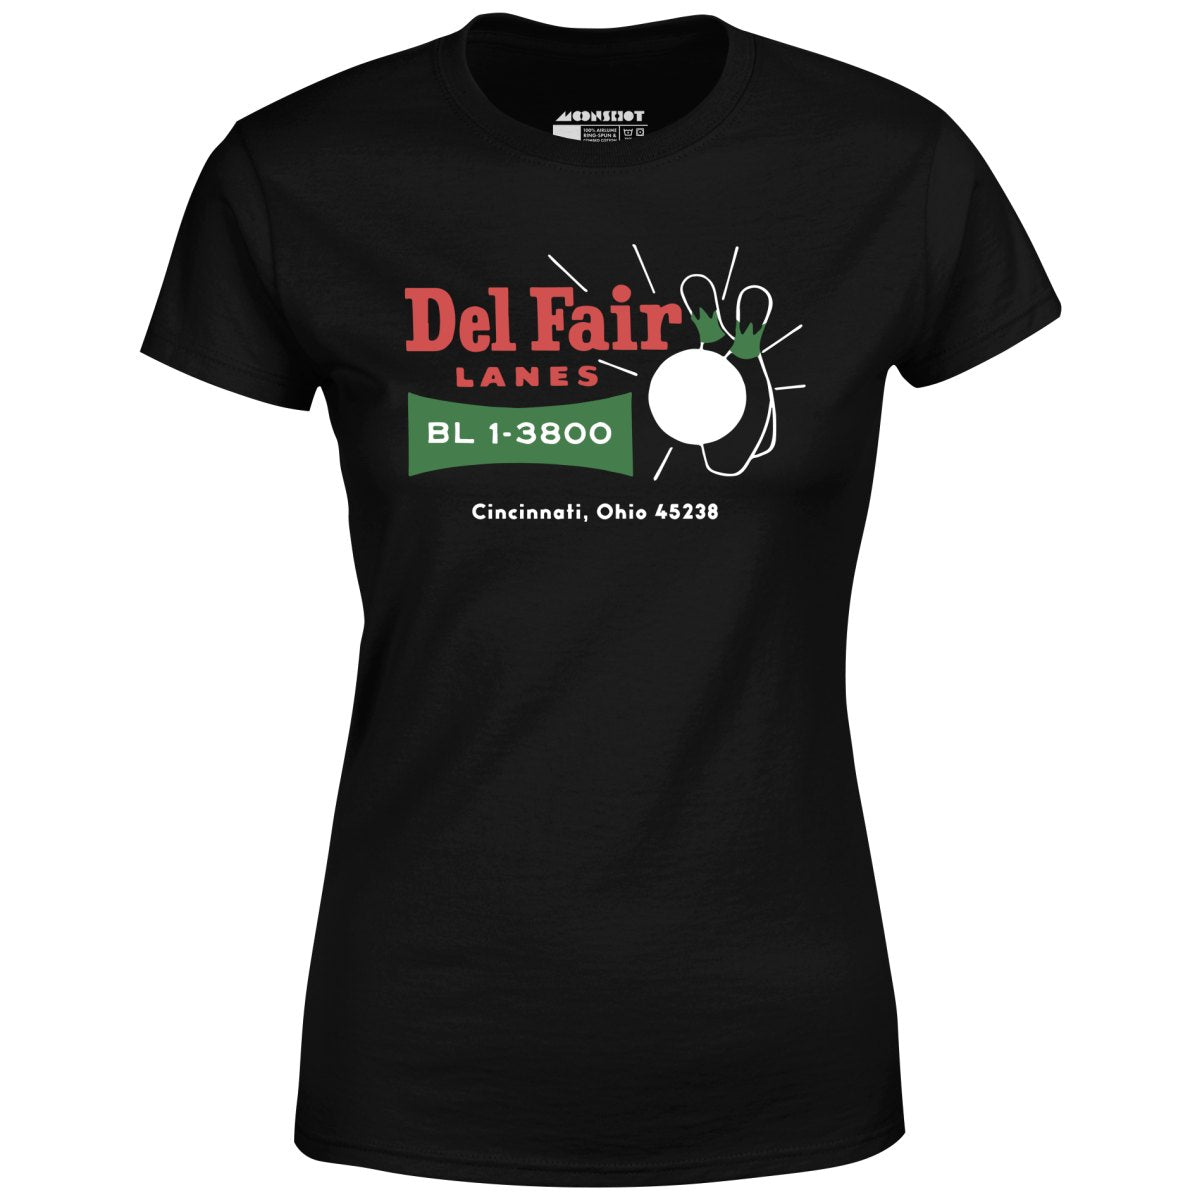 Del Fair Lanes v2 - Cincinnati, OH - Vintage Bowling Alley - Women's T-Shirt